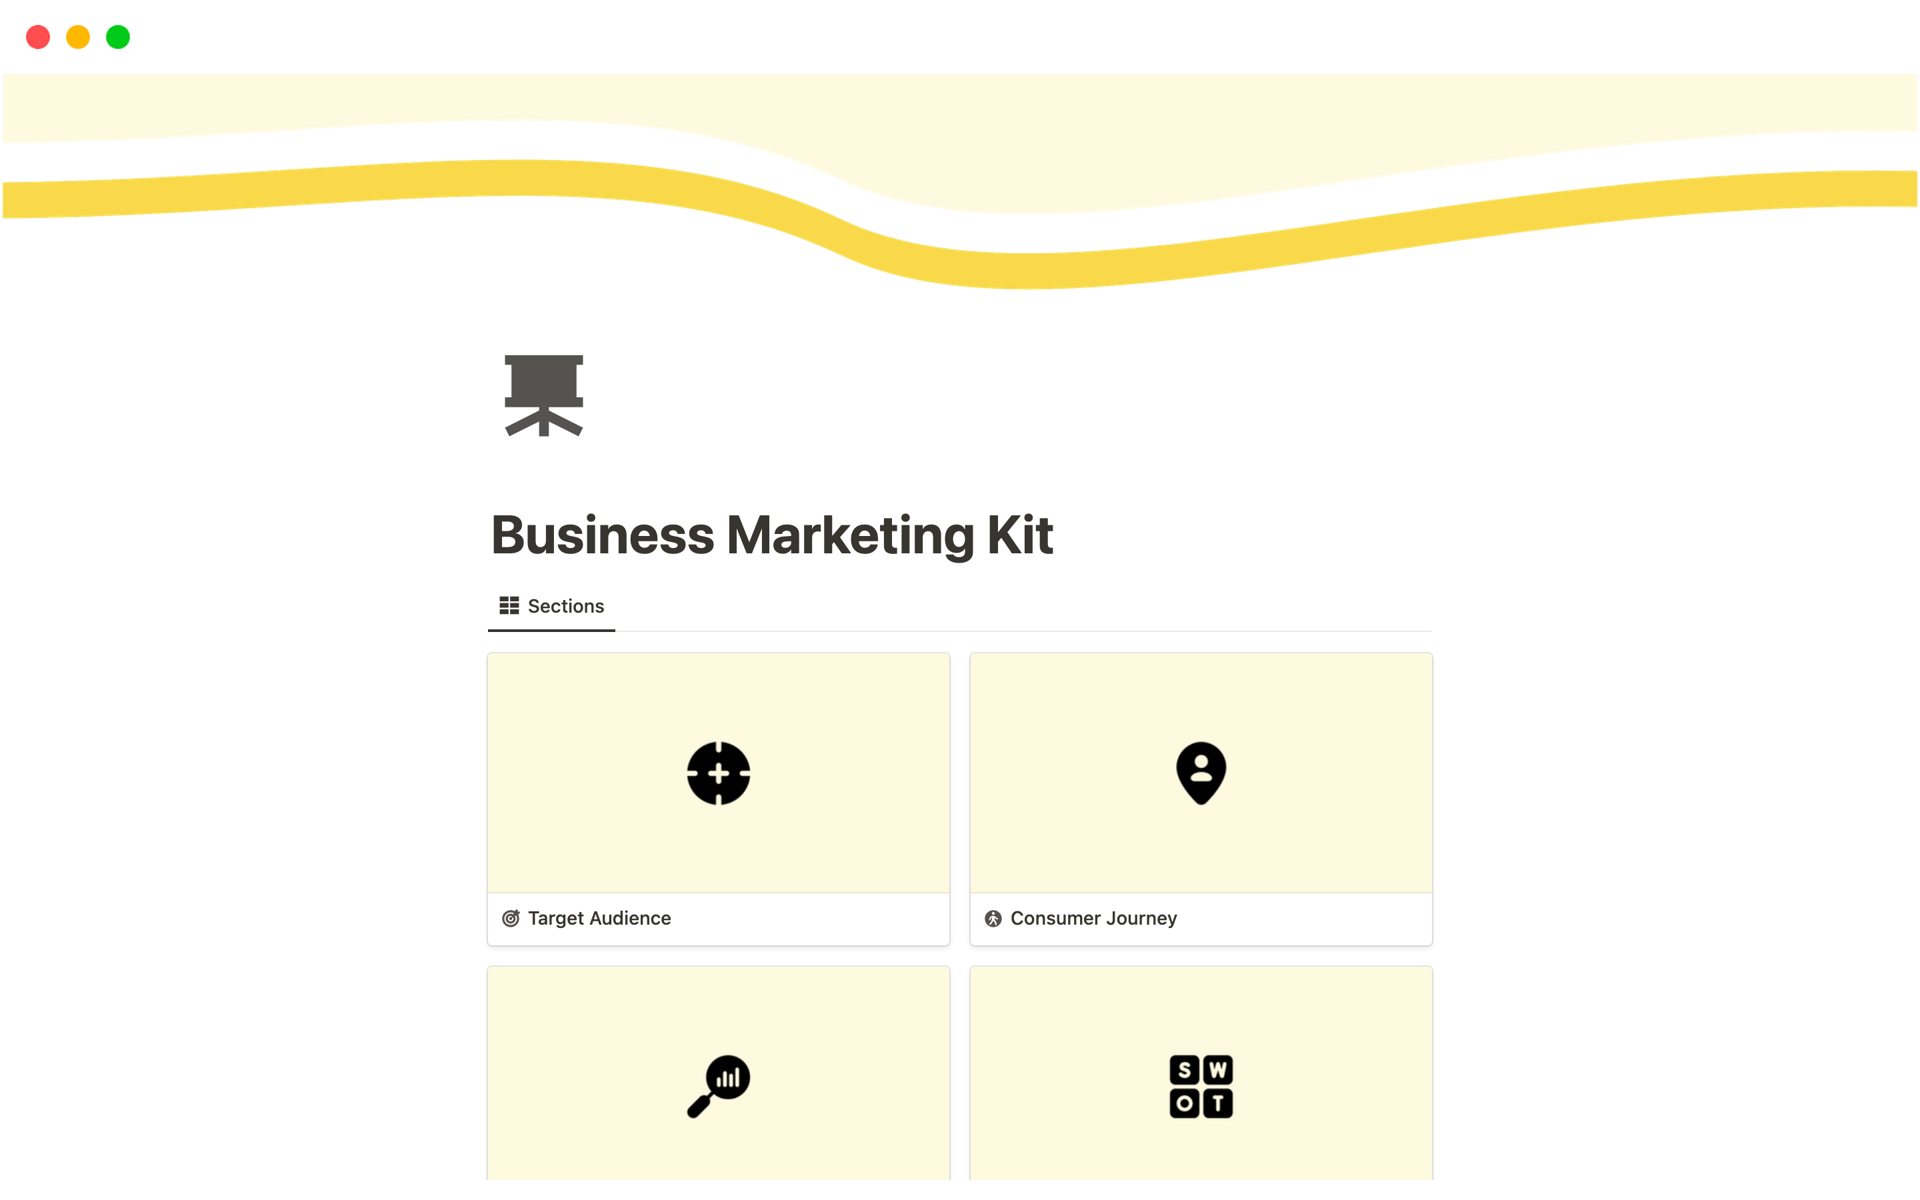 Vista previa de una plantilla para Business Marketing Kit